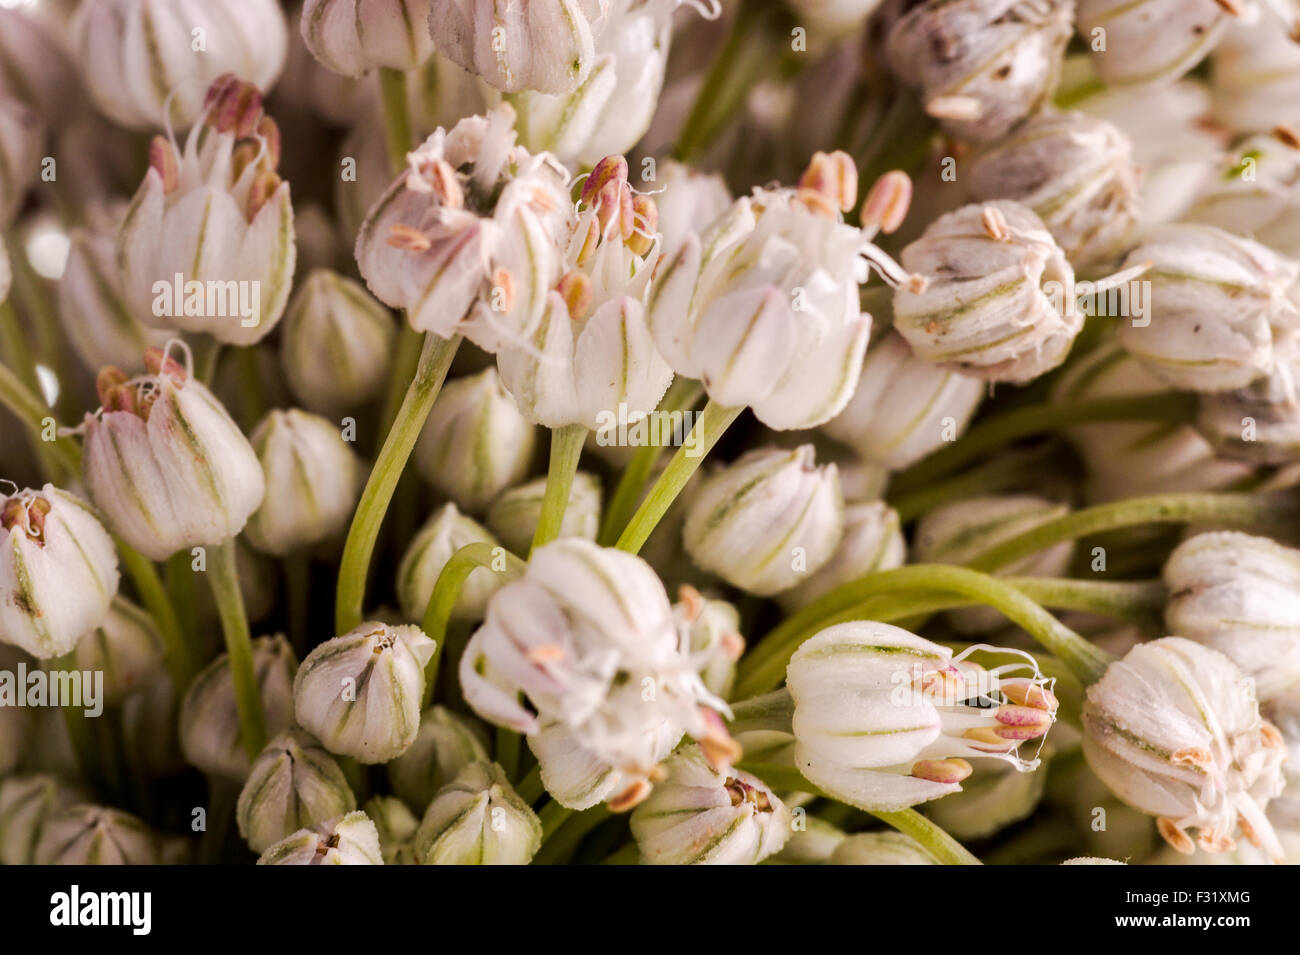 edible flower from the plant leek, Allium porrum, Macro Stock Photo